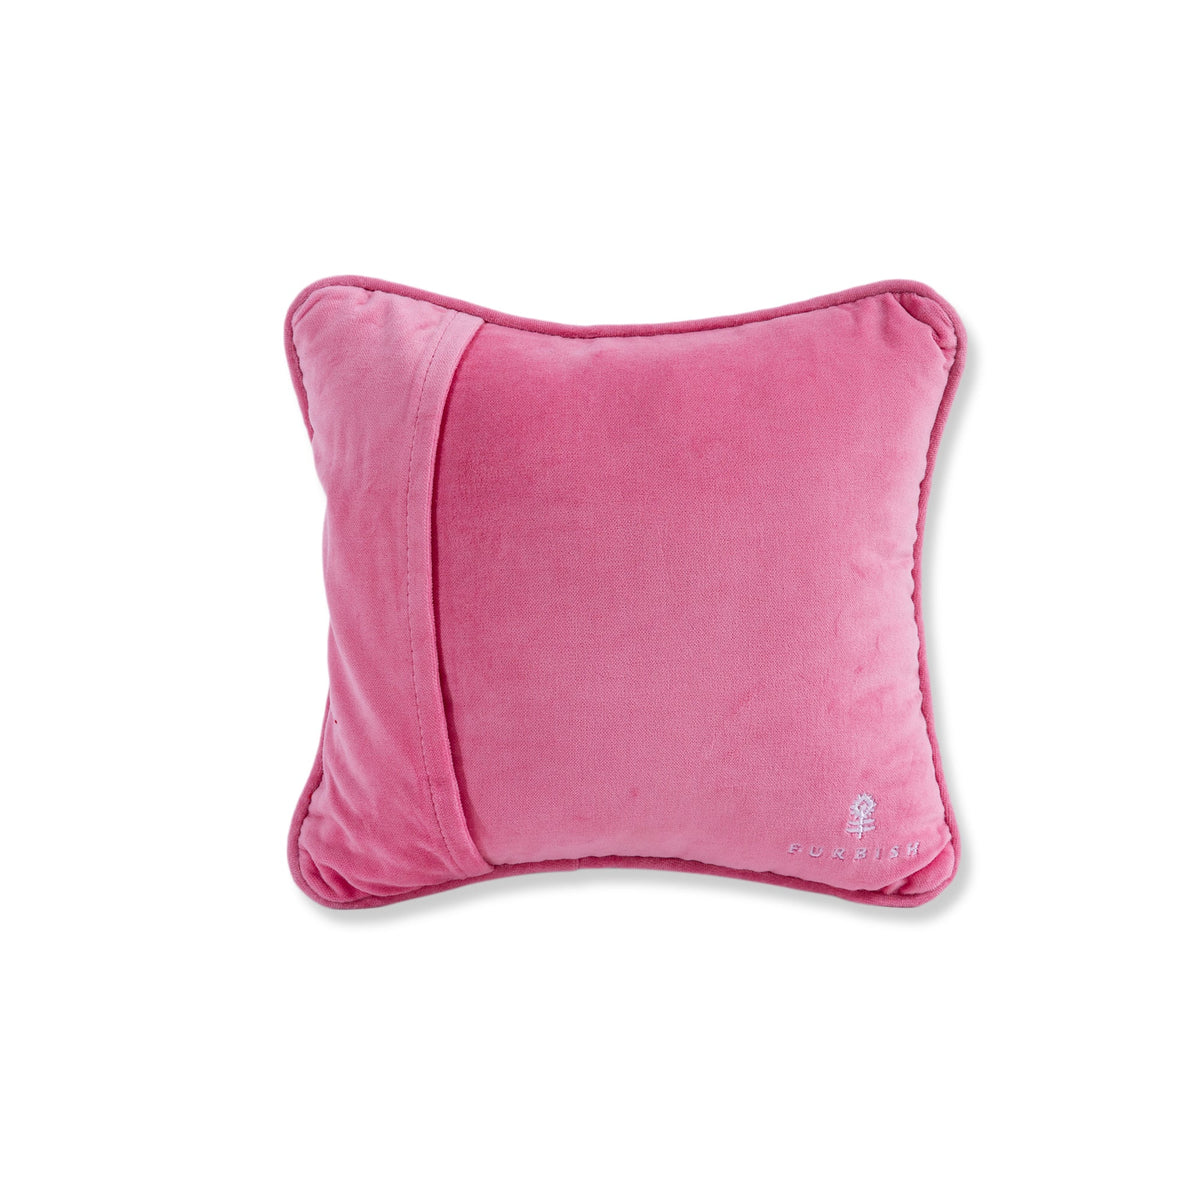 Furbish Studio - Reservations Needlepoint Pillow